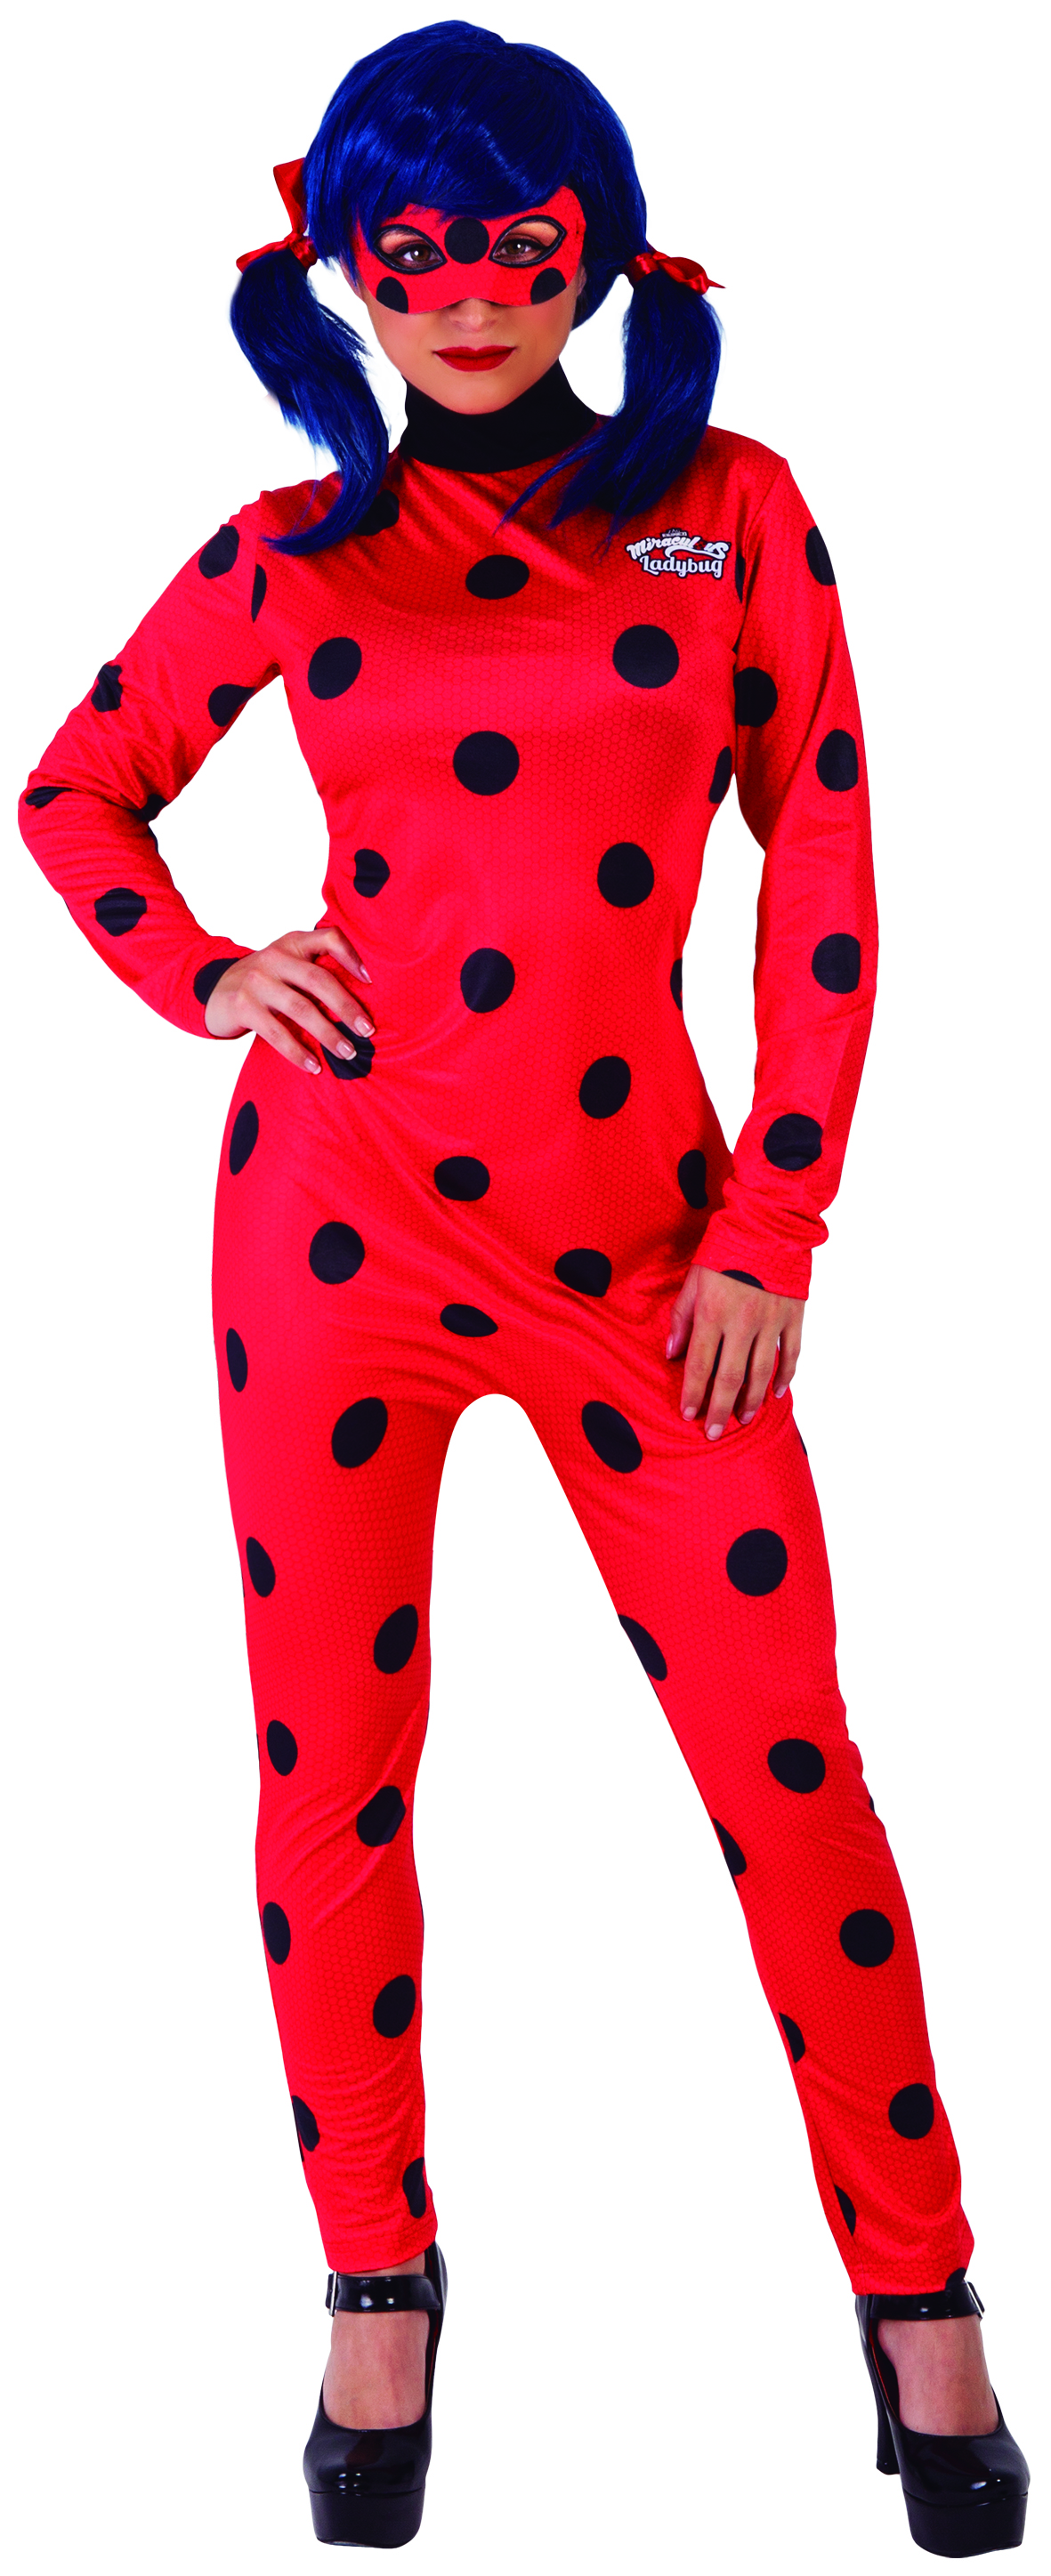 Rubies 3300258 - Miraculous Ladybug - Adult Kostüm, Gr. S, M, L - Marienkäfer